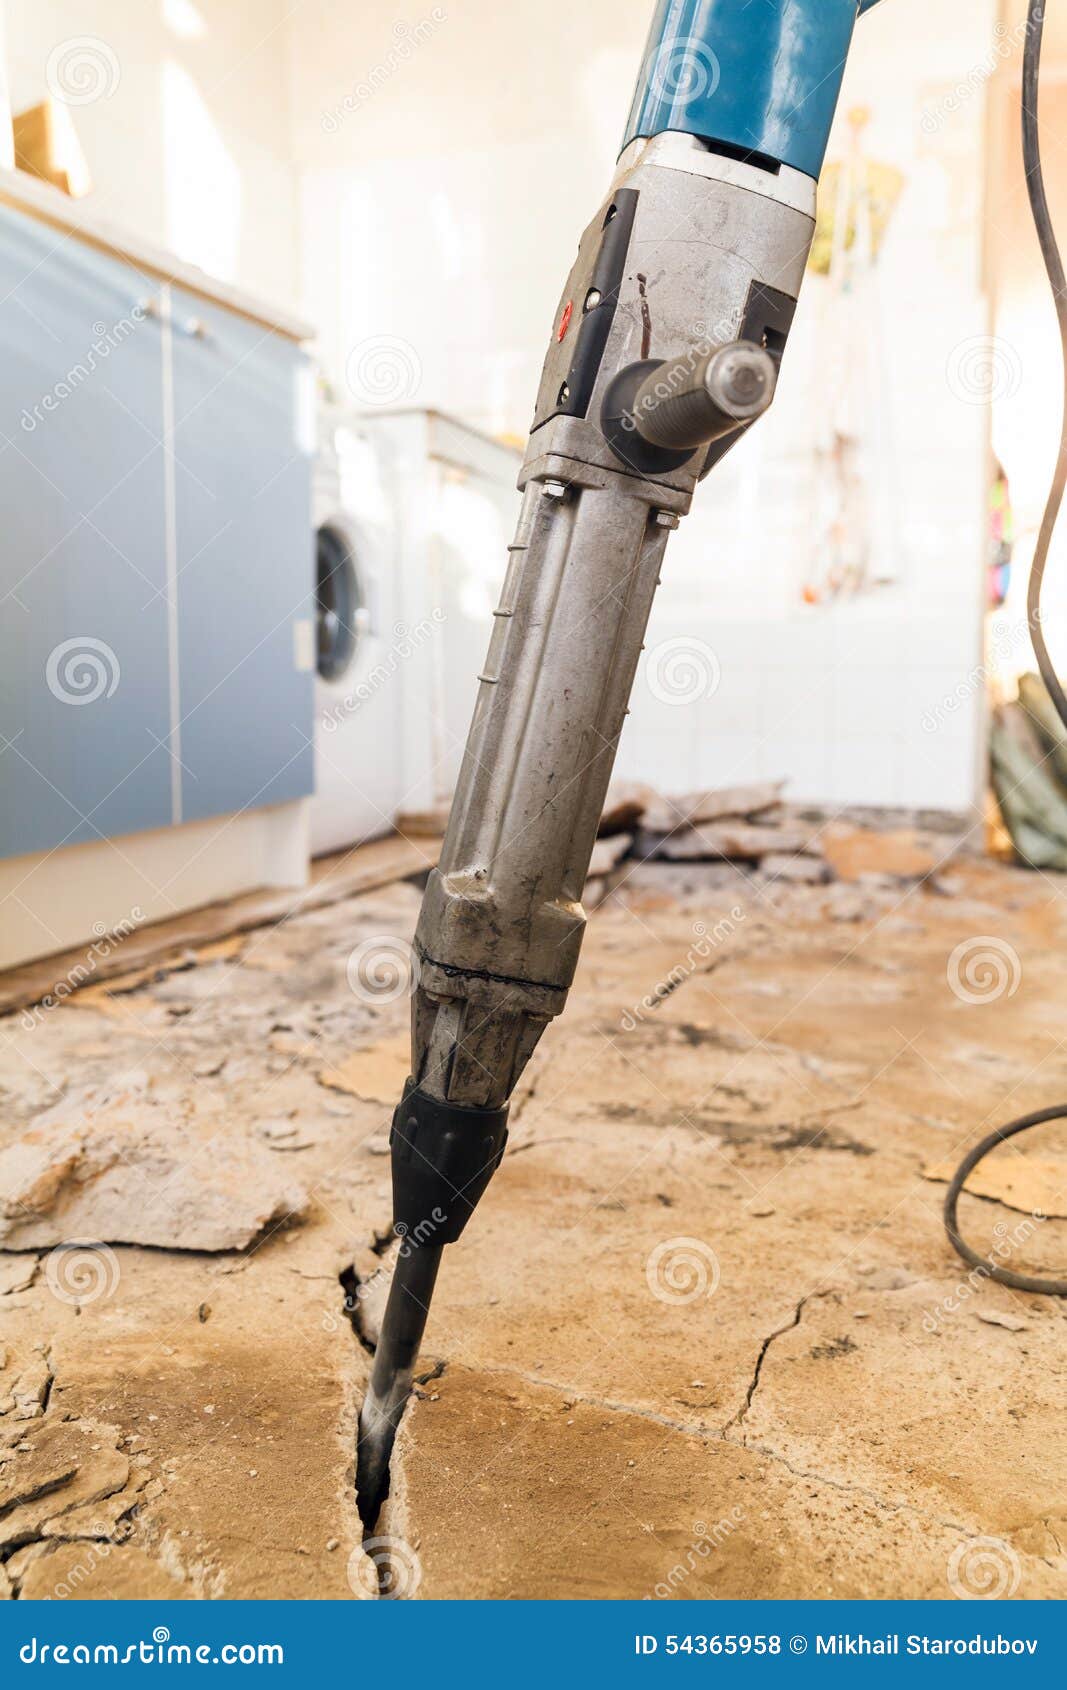 Jackhammer Breaking Up The Concrete Floor Stock Photo Image Of